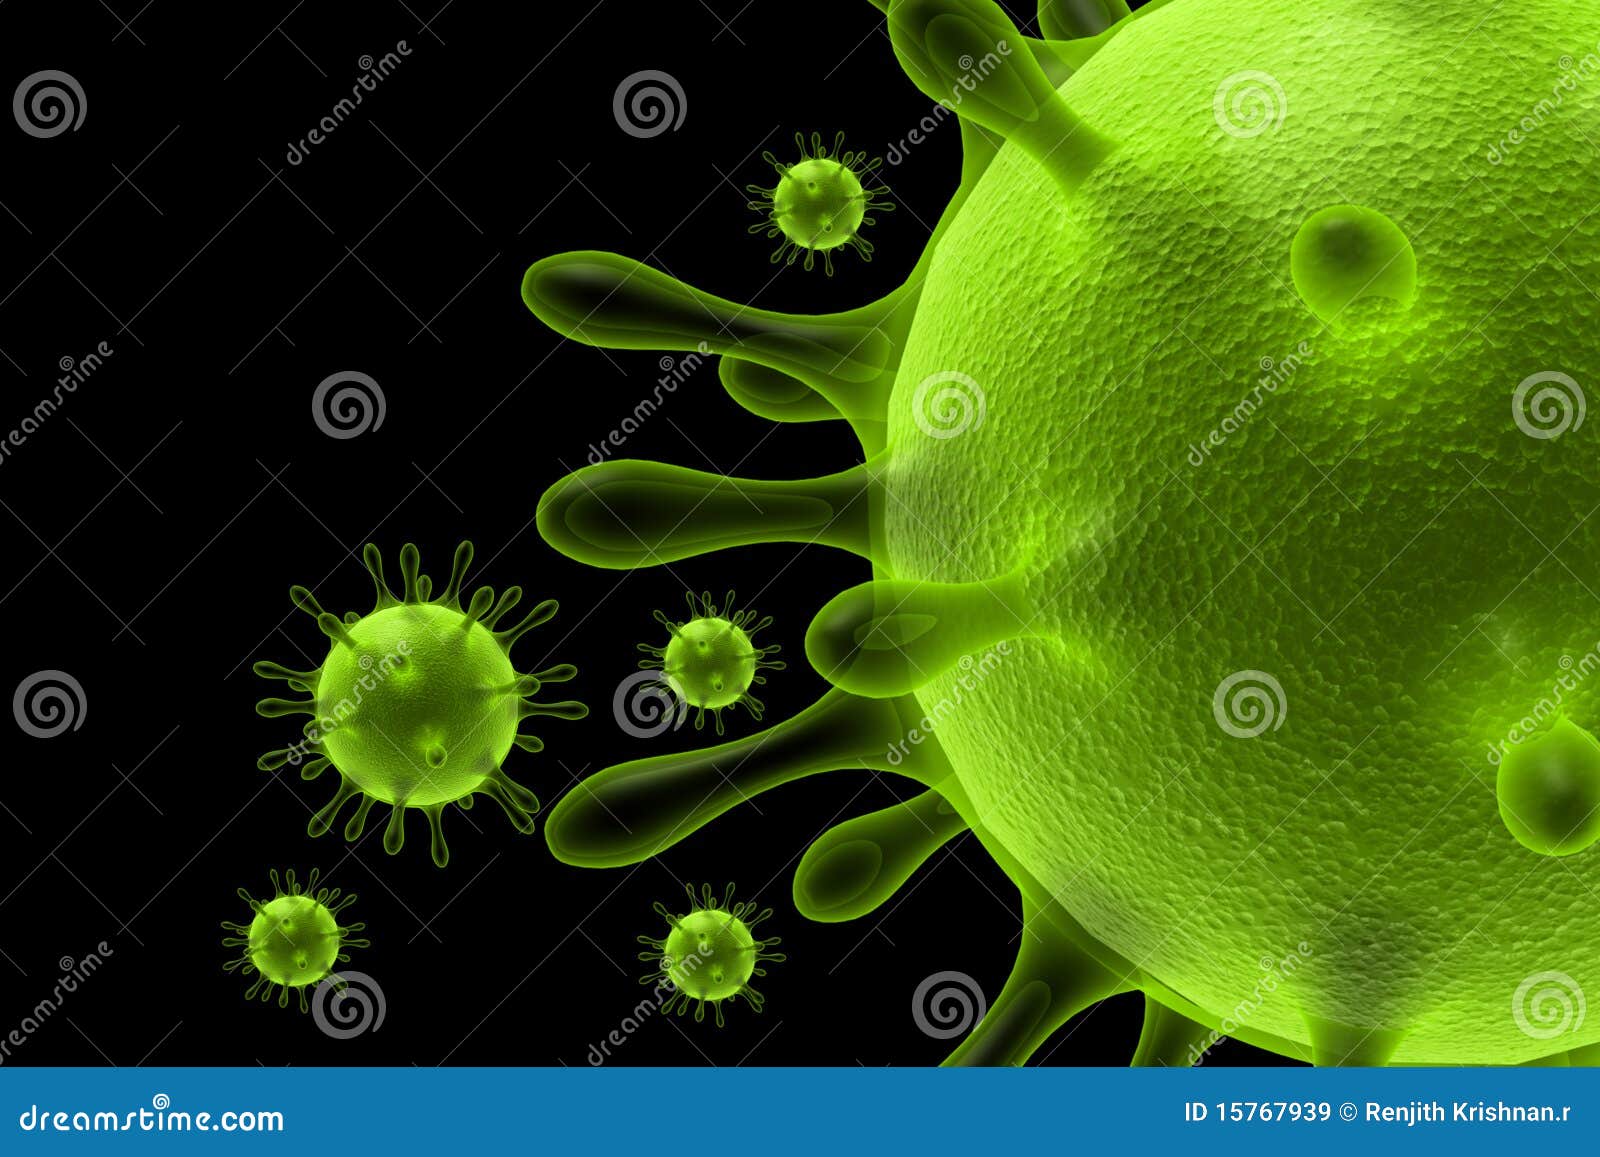 Sars virus stock illustration. Illustration of cell, biology - 157679391300 x 957